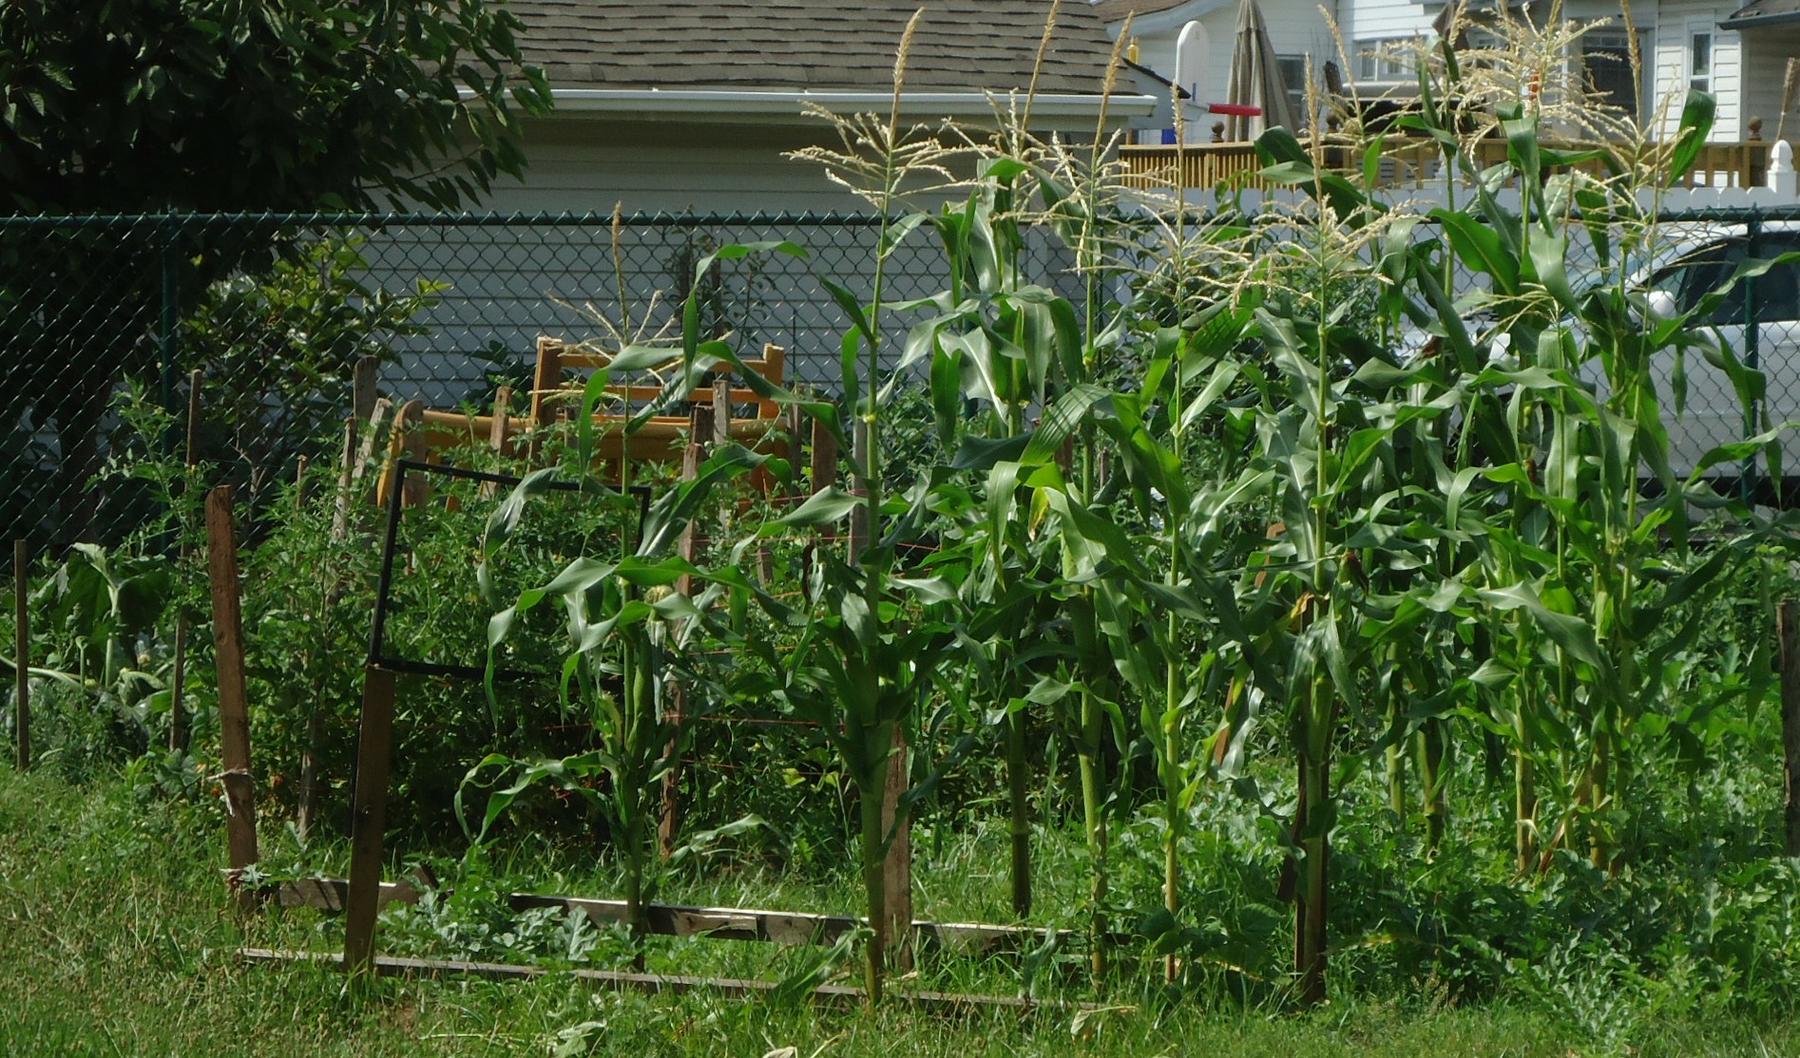 File:Corn growing in a backyard garden in New Jersey.jpg - a fence is in the fore of a corn field